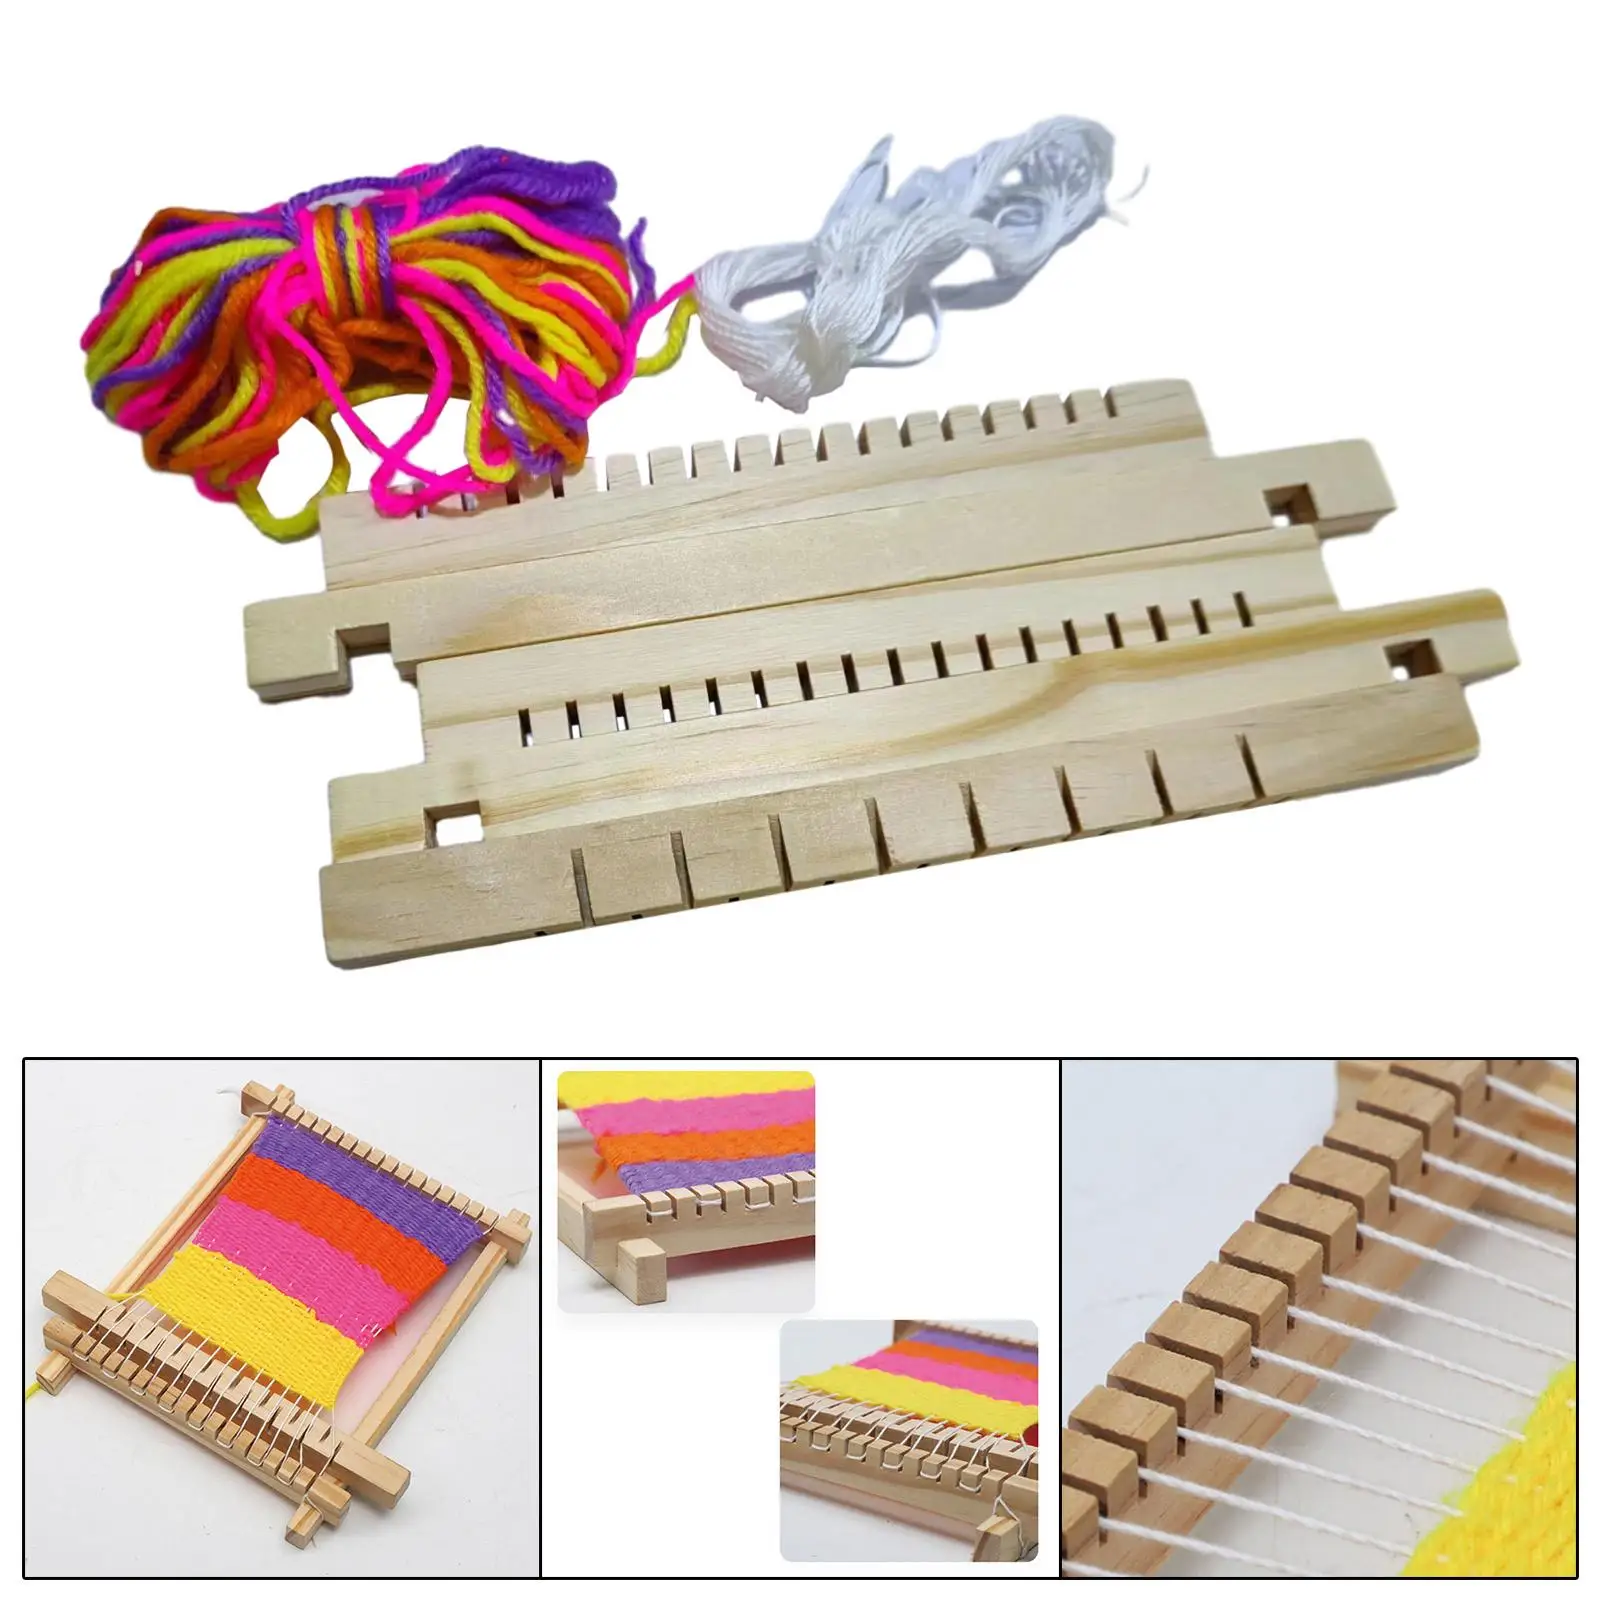 Kids Wooden Weaving Loom, Handcraft Weaving Loom, Hands on Skills for Knitted